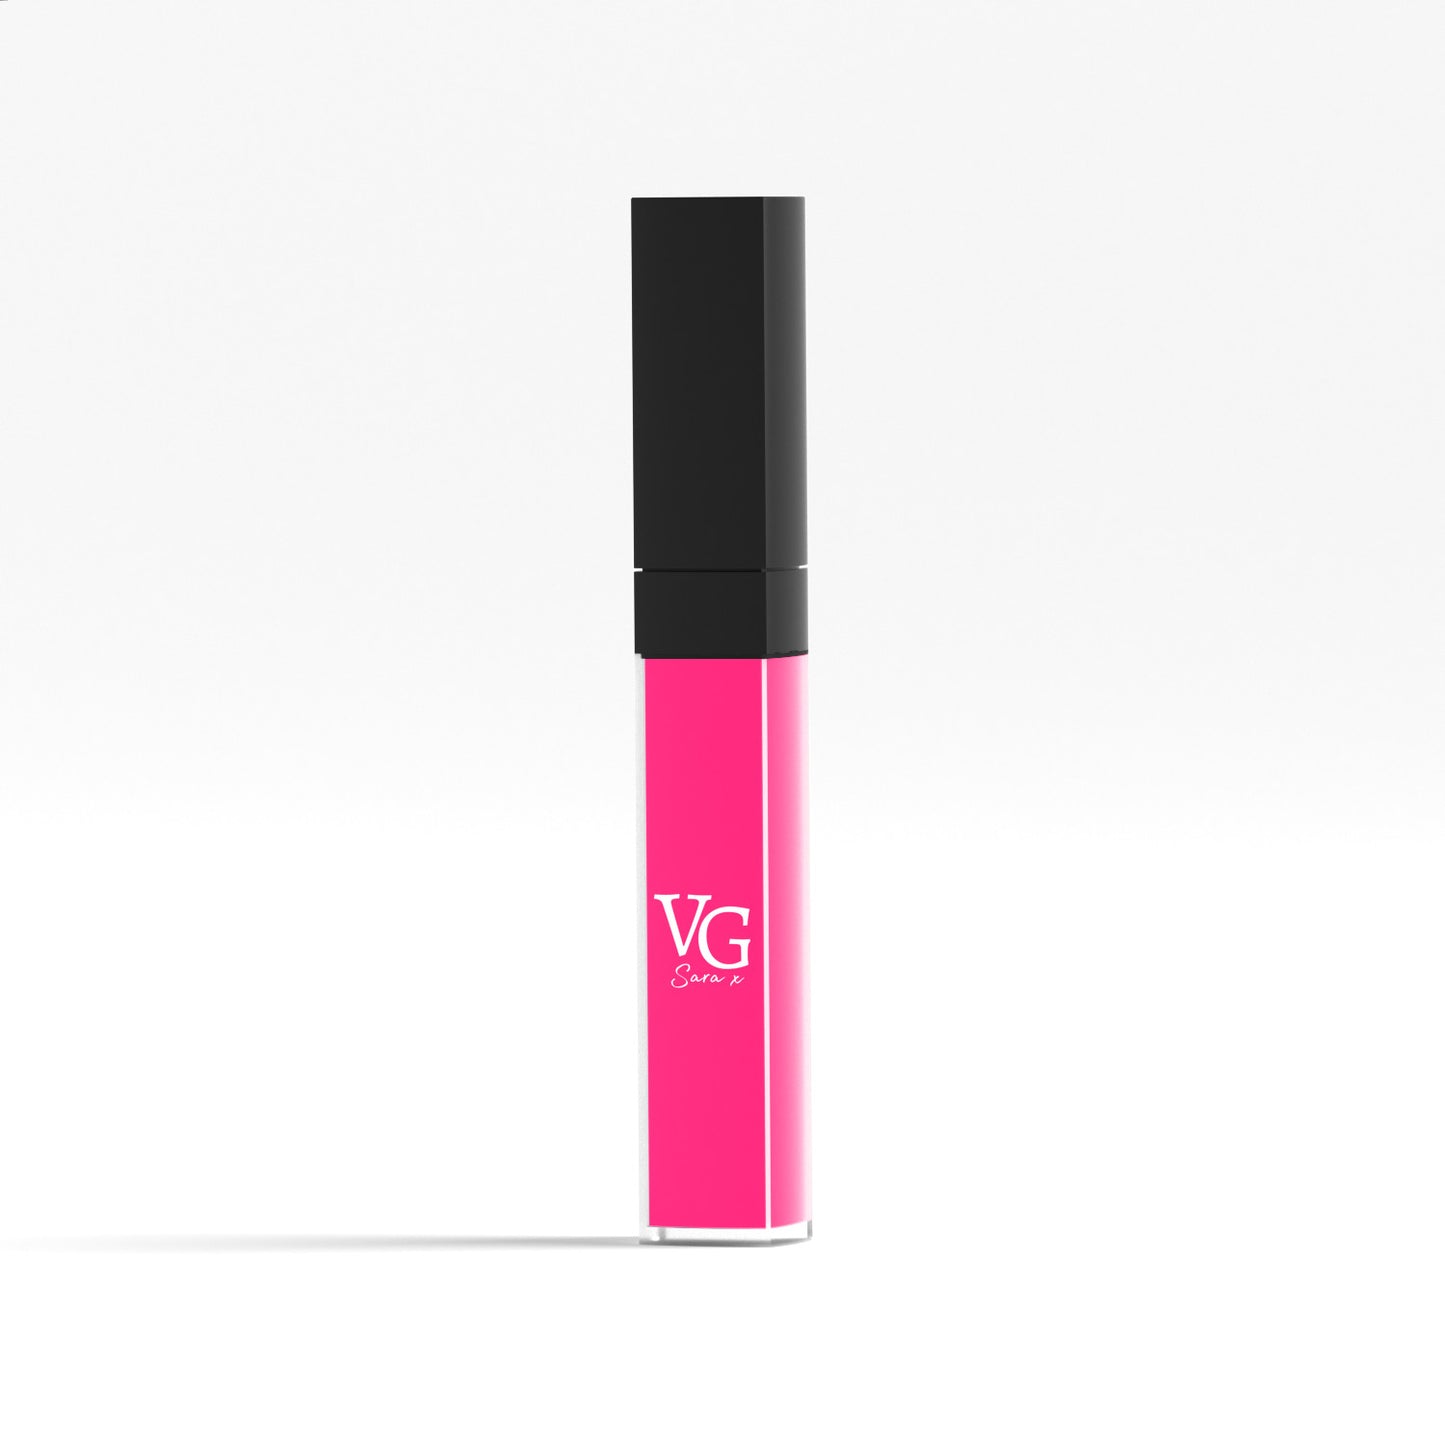 VG vegan liquid lip gloss in a soft pink color